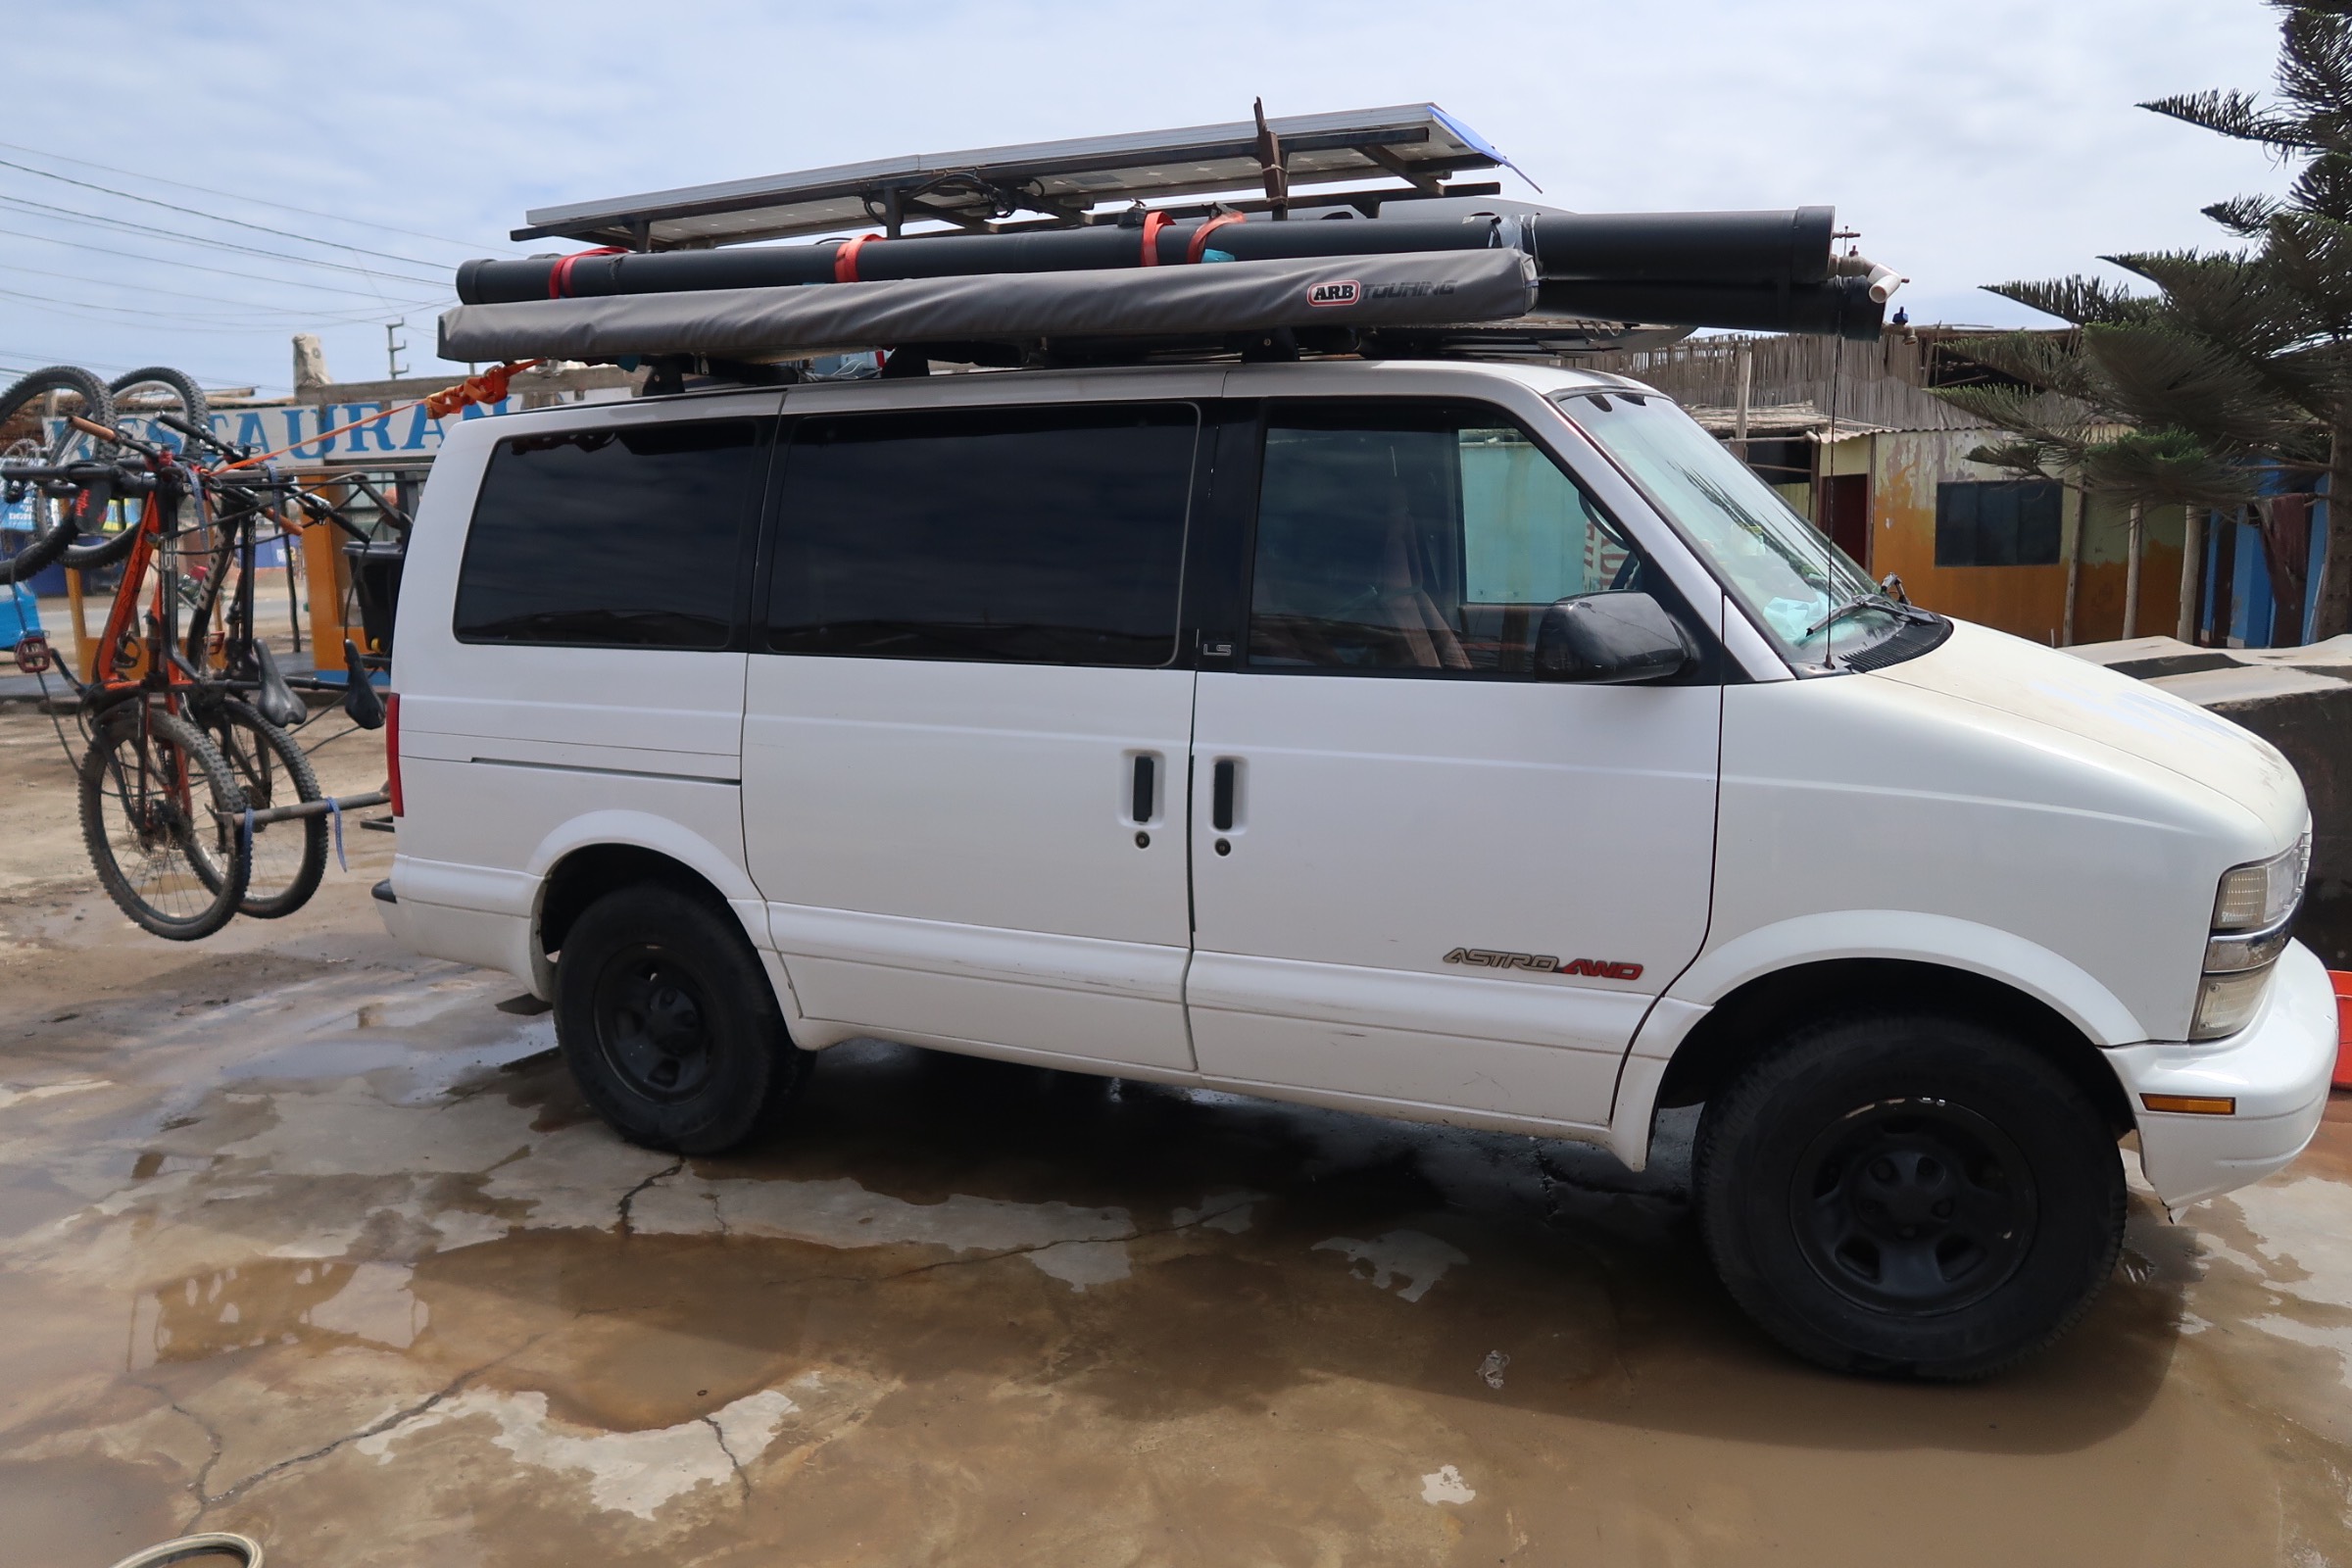 4X4 Astro Van Offroad Camper - Ecuador - $6000 Expedition Vehicles For Sale...